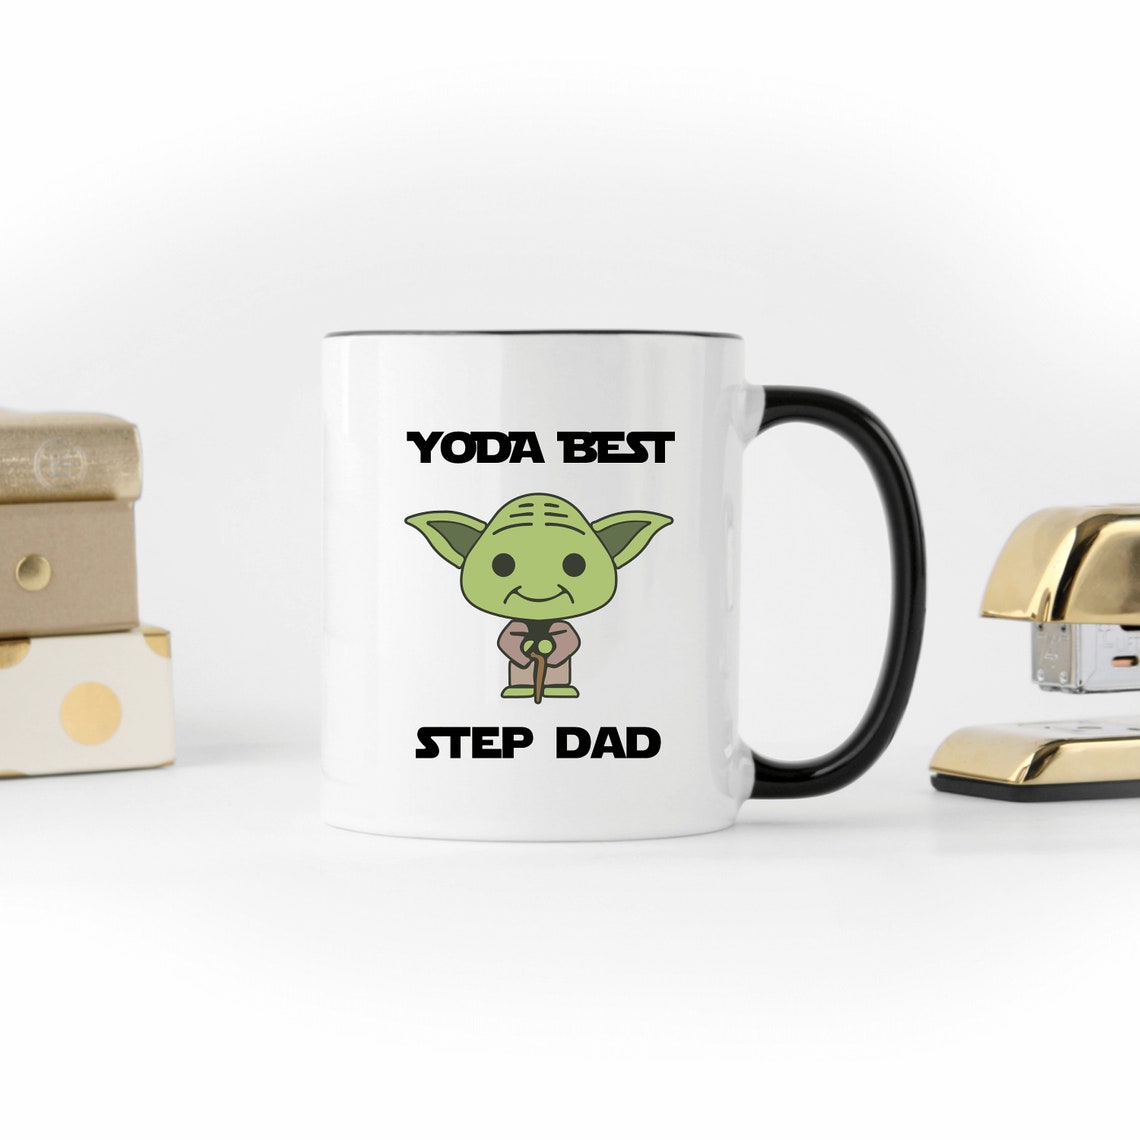 Father's day gifts star wars mug to stepdad yoda best | Etsy